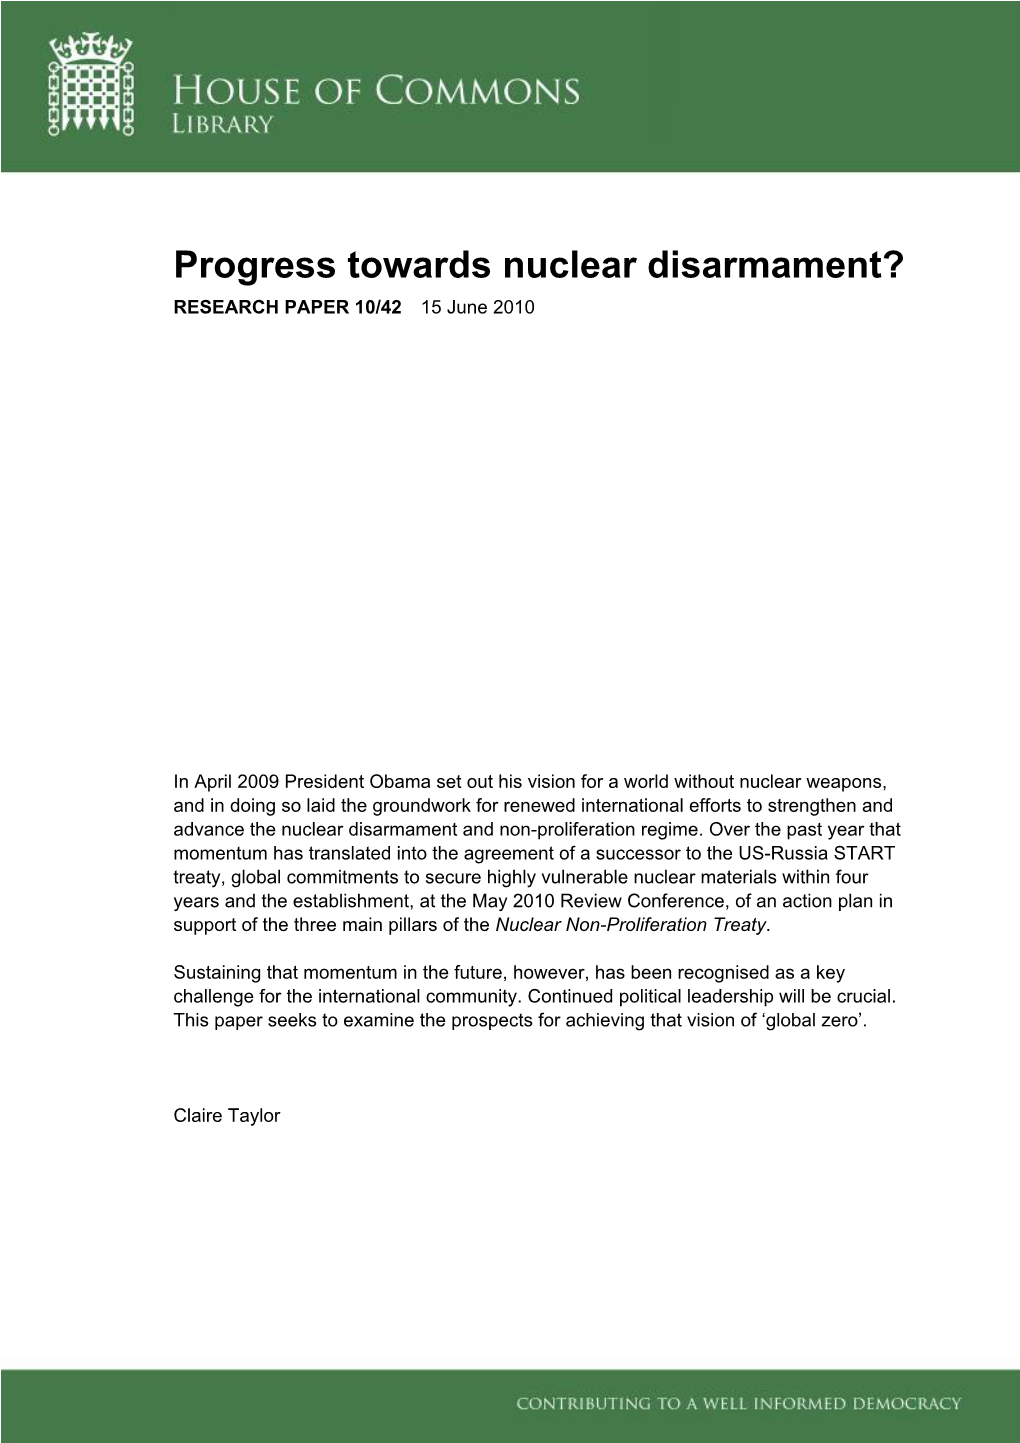 Progress Towards Nuclear Disarmament? RESEARCH PAPER 10/42 15 June 2010